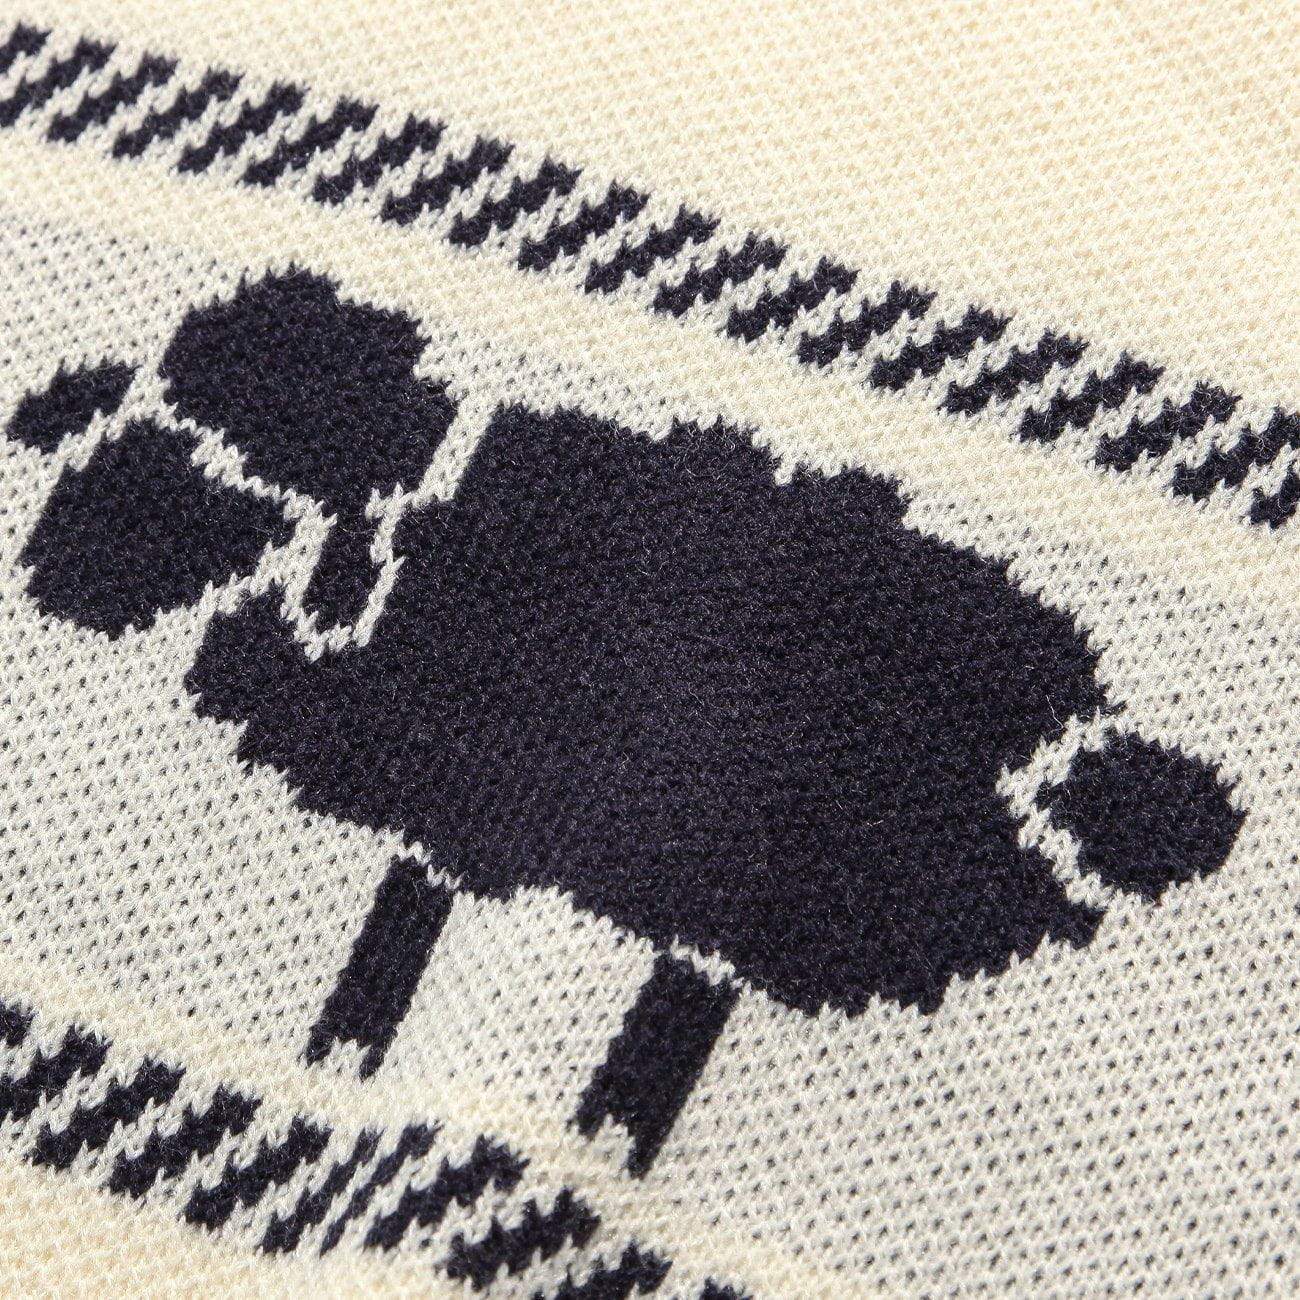 JUSTNOTAG Vintage Lamb Jacquard Sweater